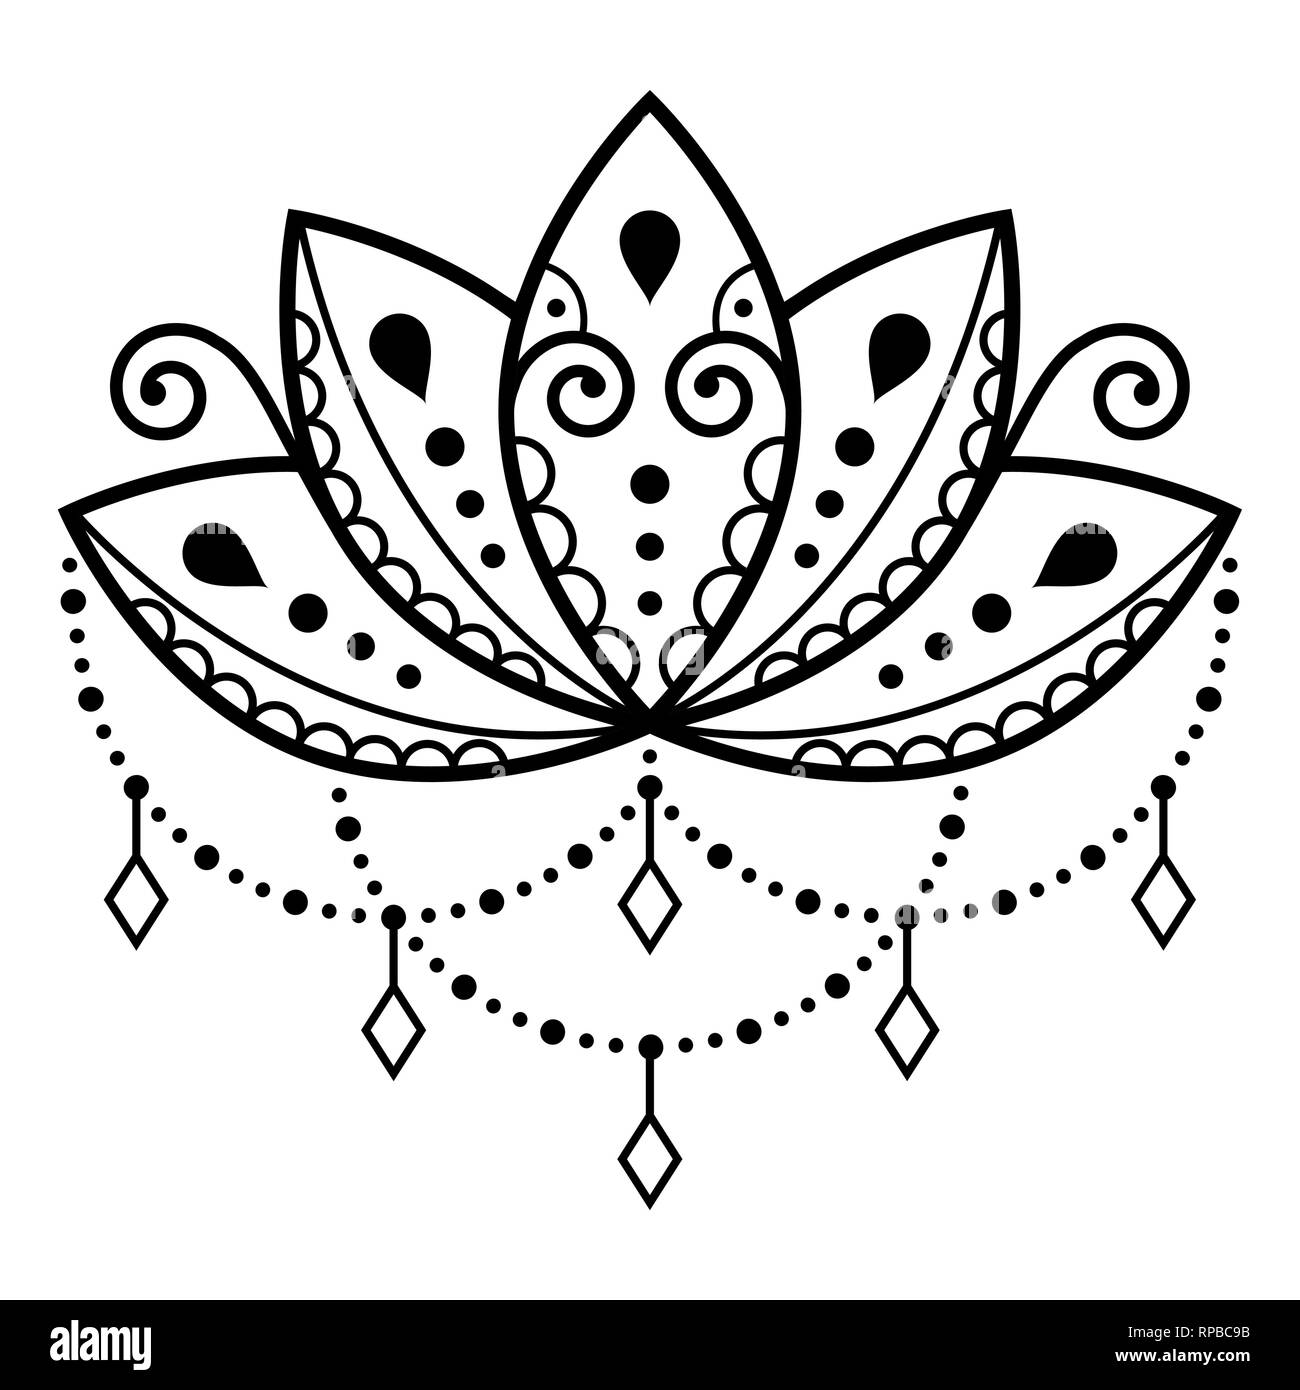 Lotus flower vector design, Mehndi henna tattoo style, Yoga or zen decoration, boho style Stock Vector